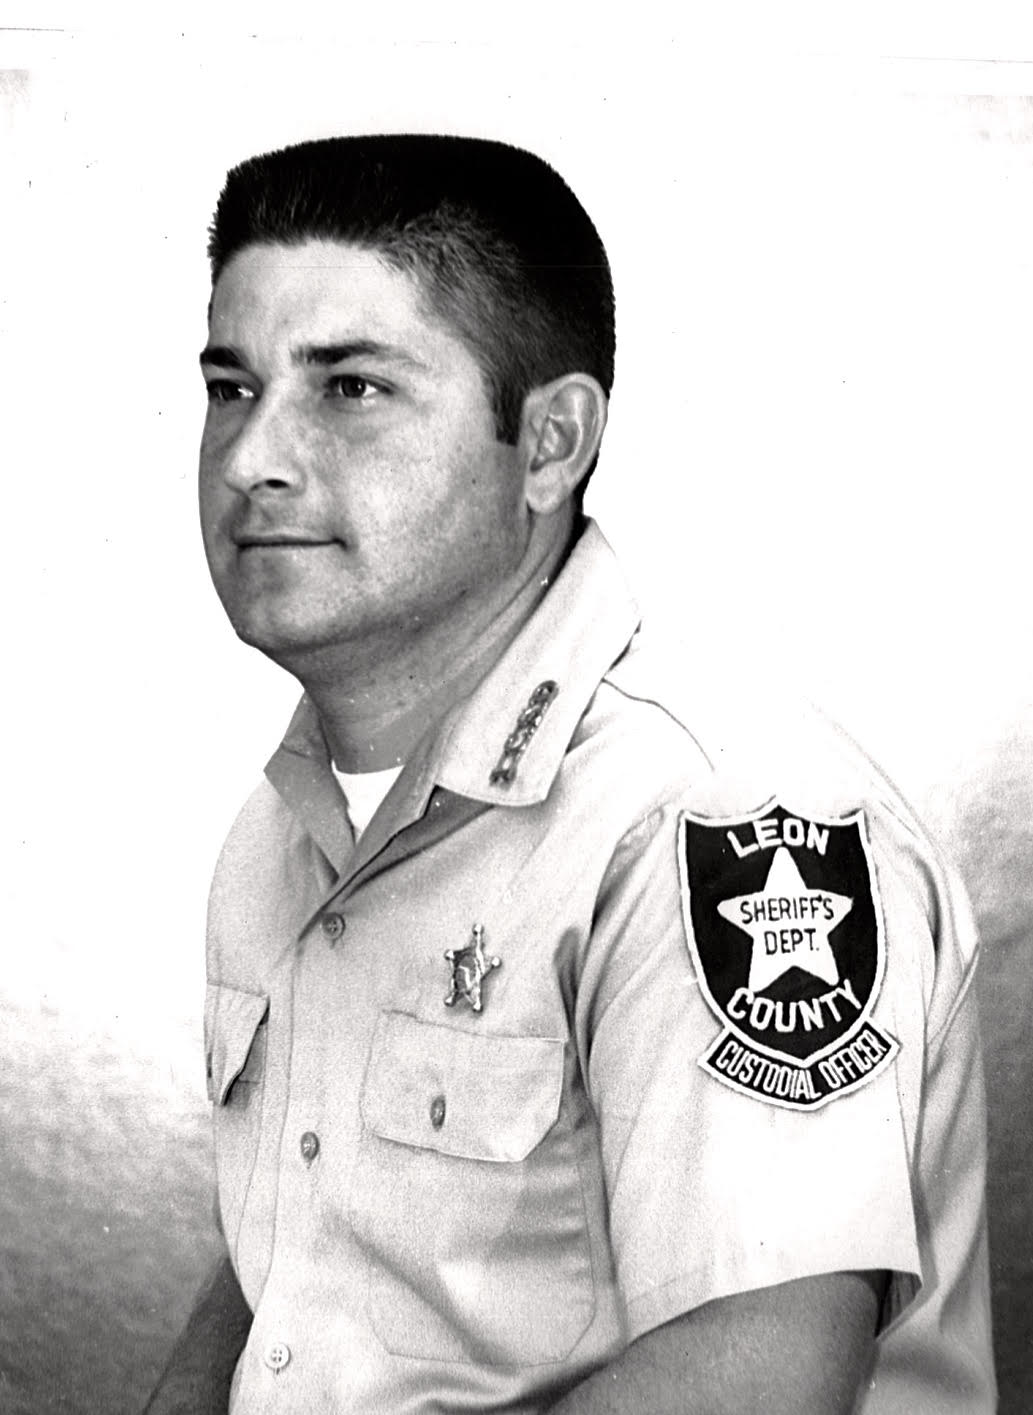 Deputy Sheriff Khomas Cellus Revels | Leon County Sheriff's Office, Florida